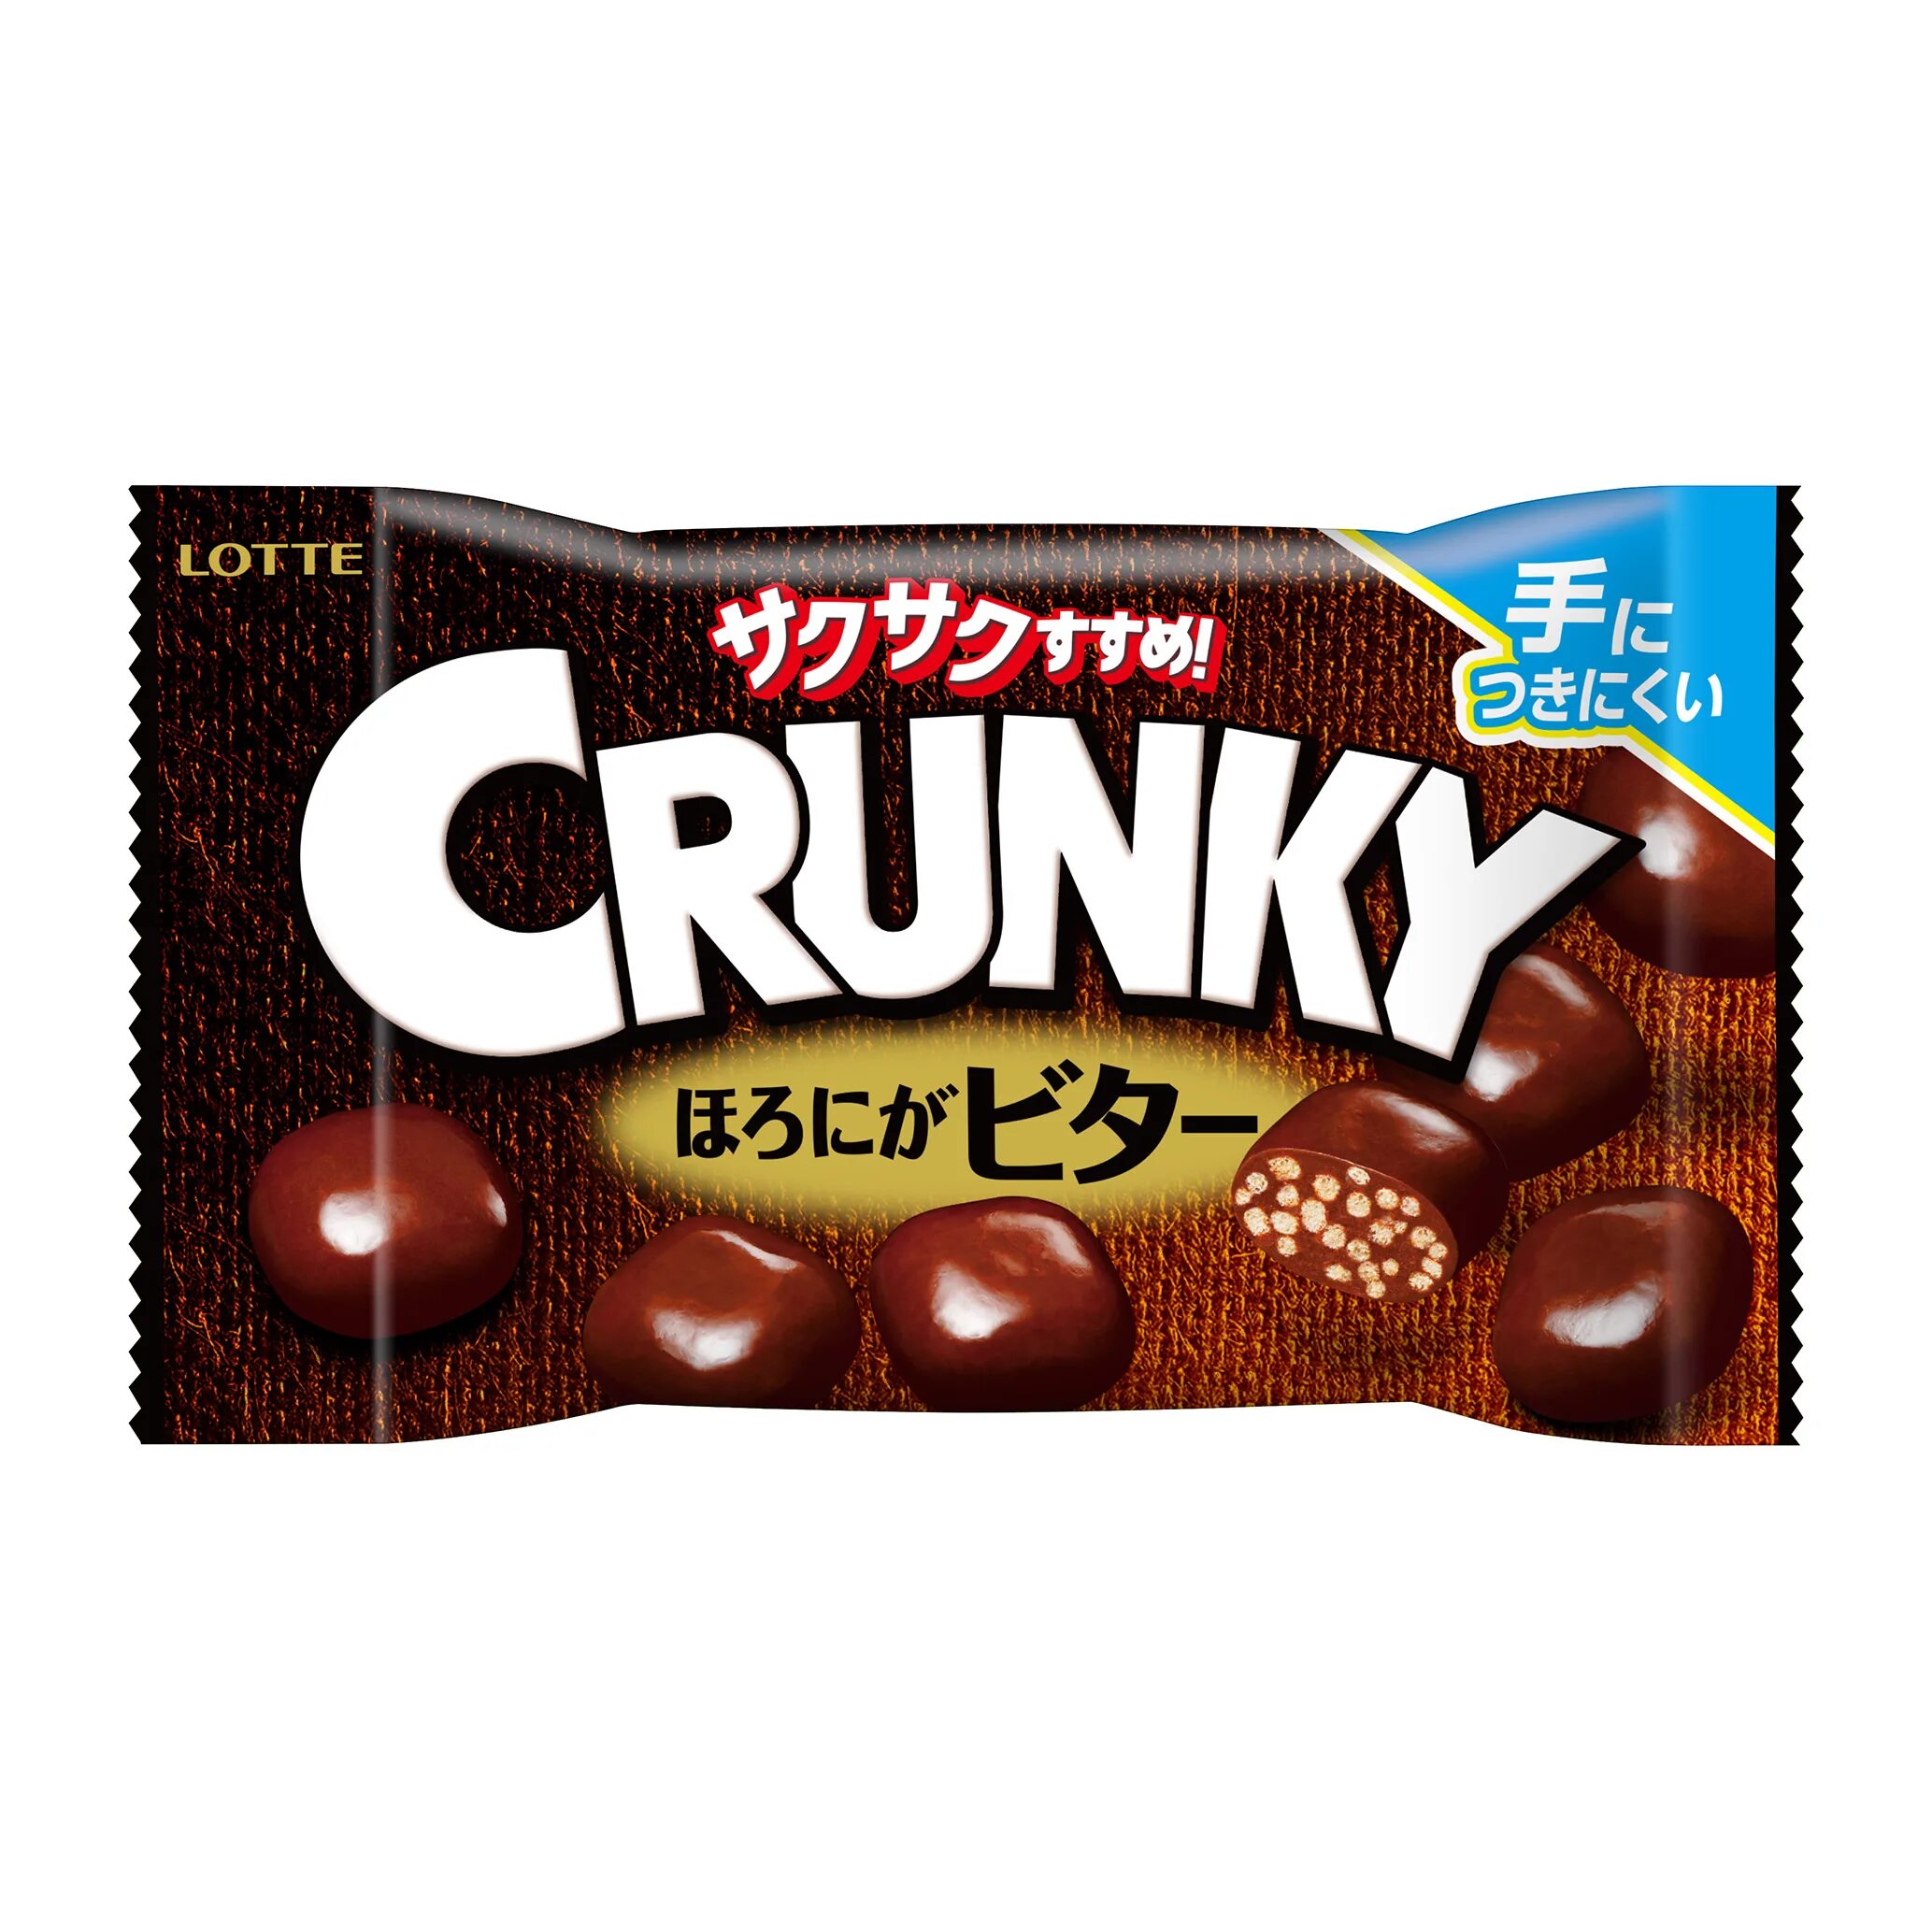 Хрустящие шоколадные шарики. Crunky Lotte. Crunky шоколад. Lotte шоколад.